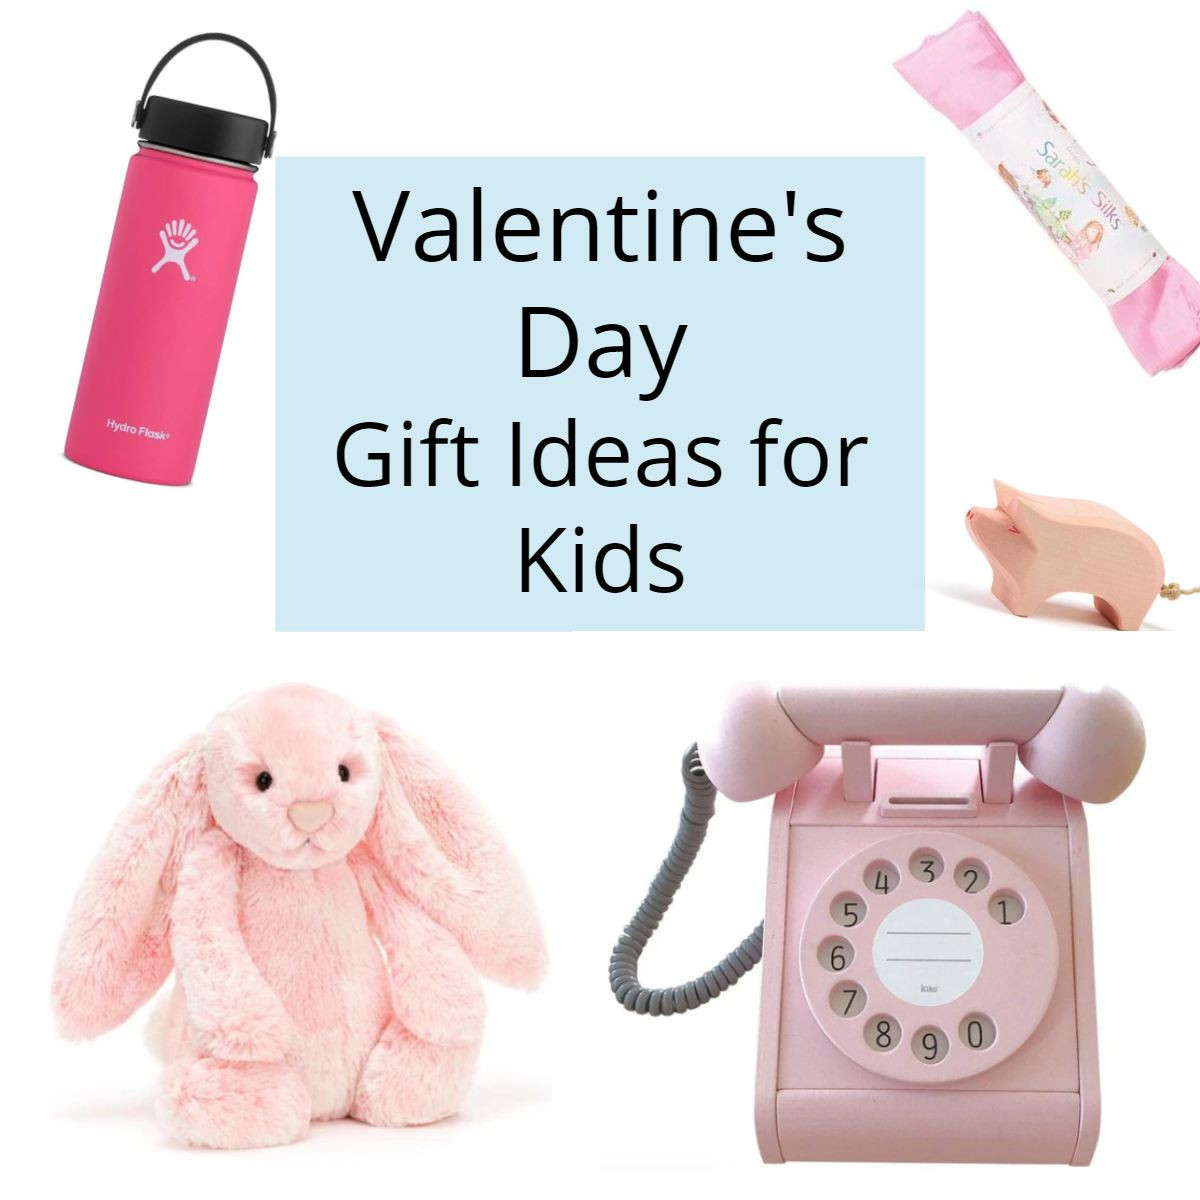 Valentines Gift Ideas 2020
 Valentine’s Day Gift Ideas for Kids 2020 – The Modern